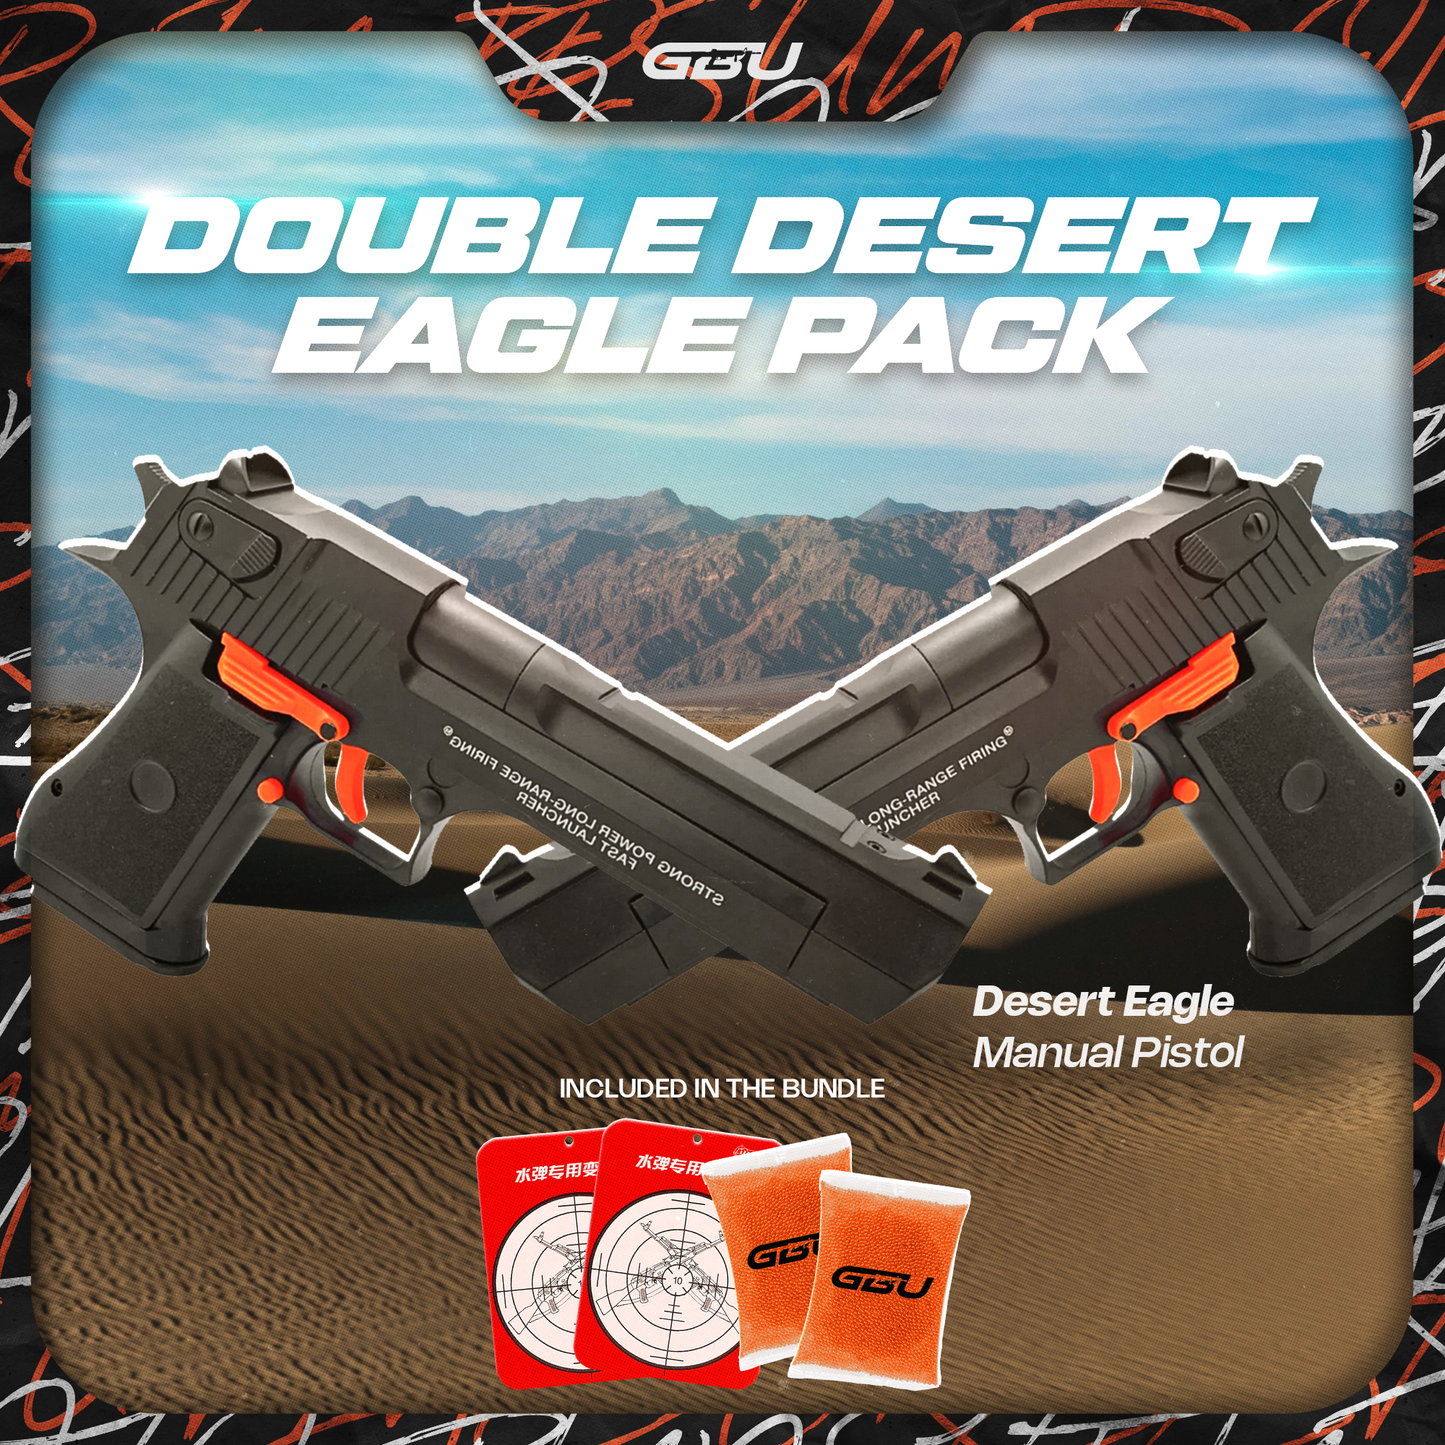 Double Trouble Desert Eagle Pack